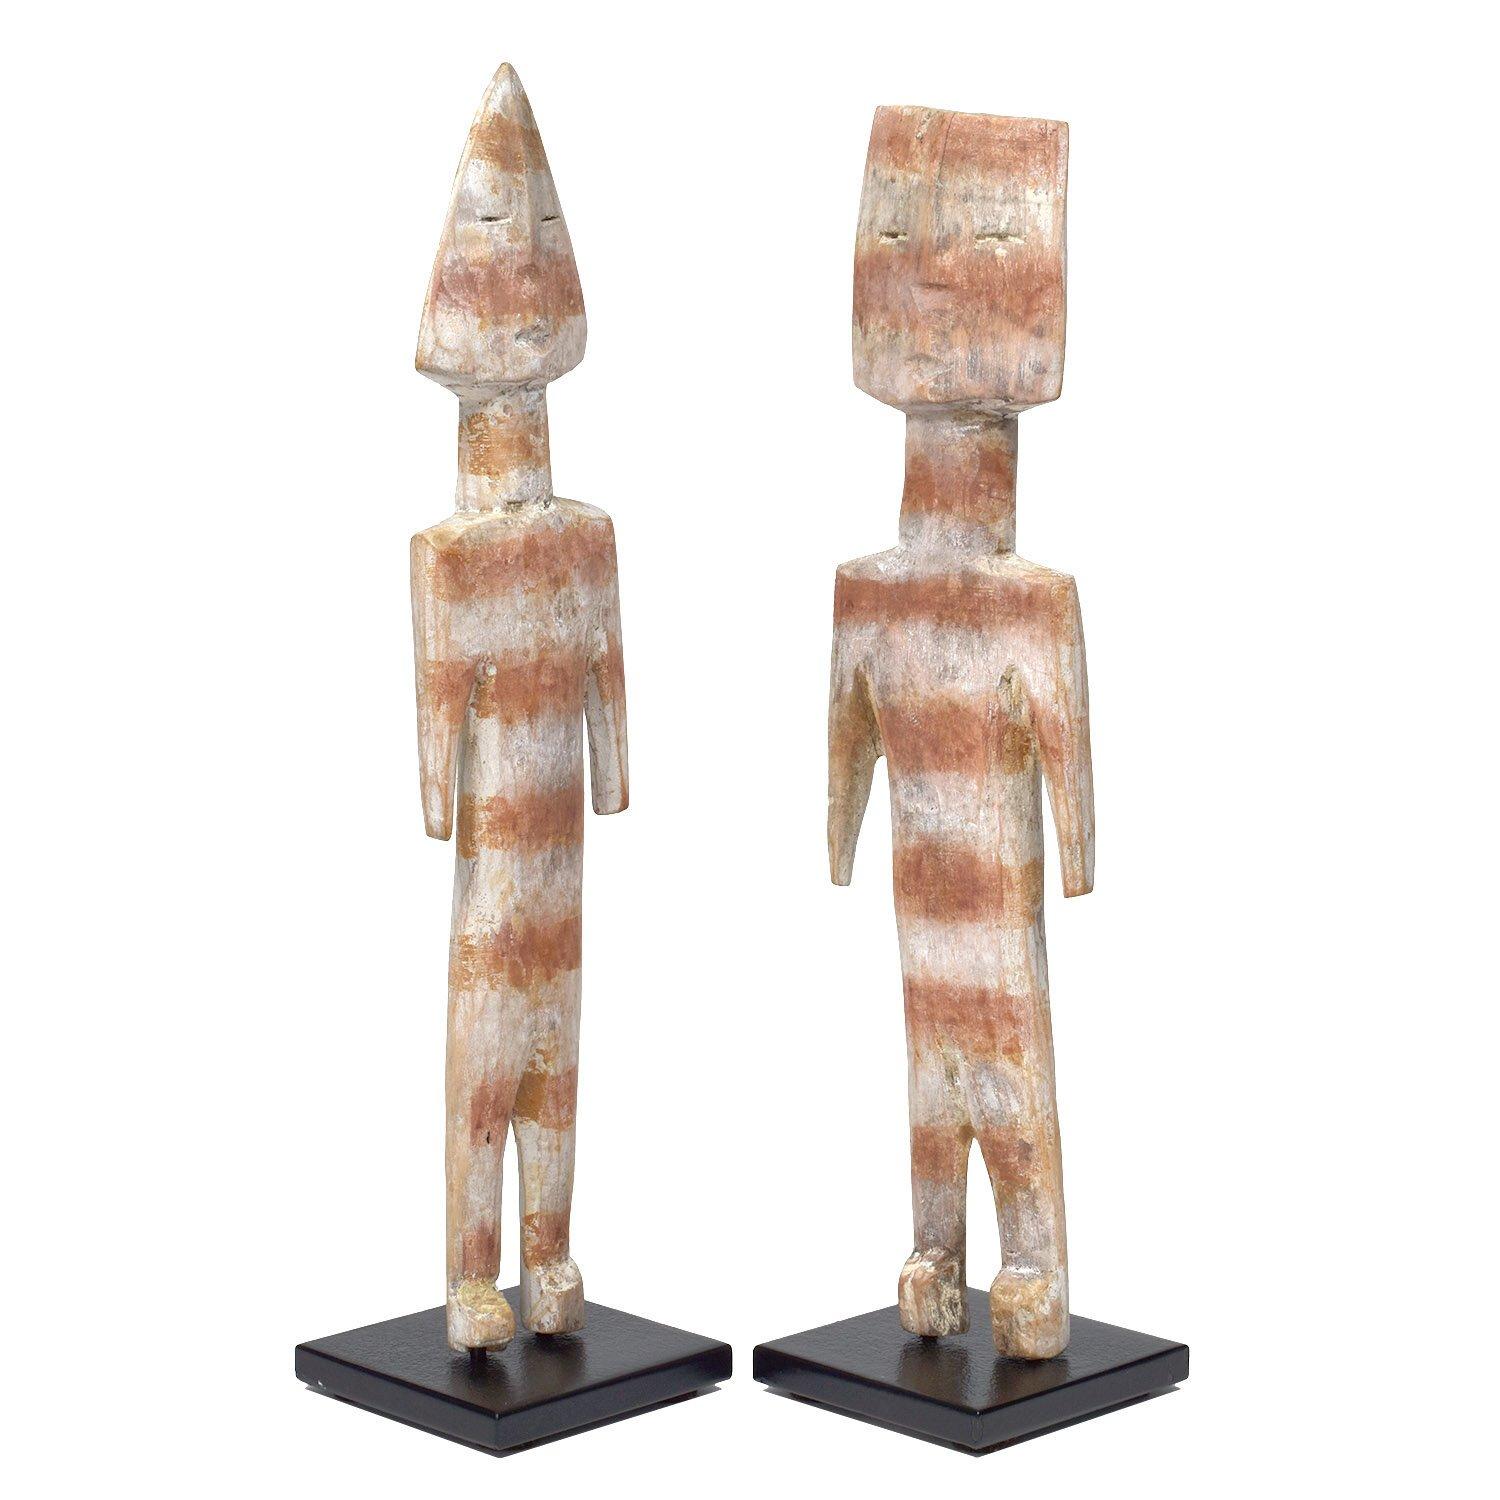 African Adja protective spirit figures Aklama twins.

Togo, Africa.
Wood, pigment.
20th Century
Left: 8 x 1.75 x 0.5 / 20 x 4.5 x 1 cm.
Right: 7.75 x 1.75 x 0.5 in. / 19.5 x 4.5 x 1 cm.